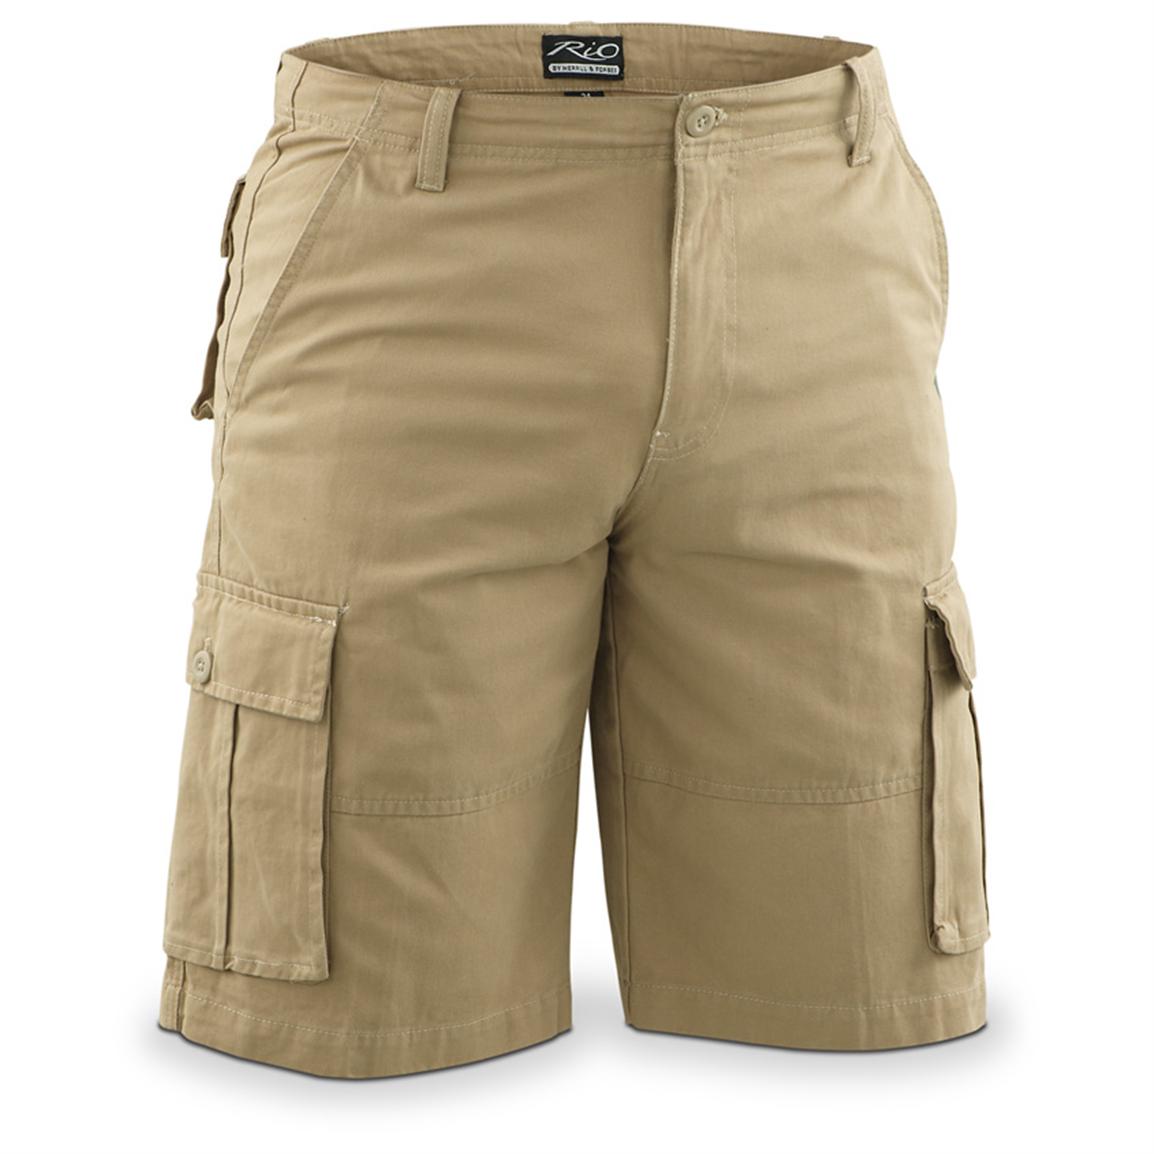 Rio® Button Pocket Cargo Shorts - 294638, Shorts at Sportsman's Guide